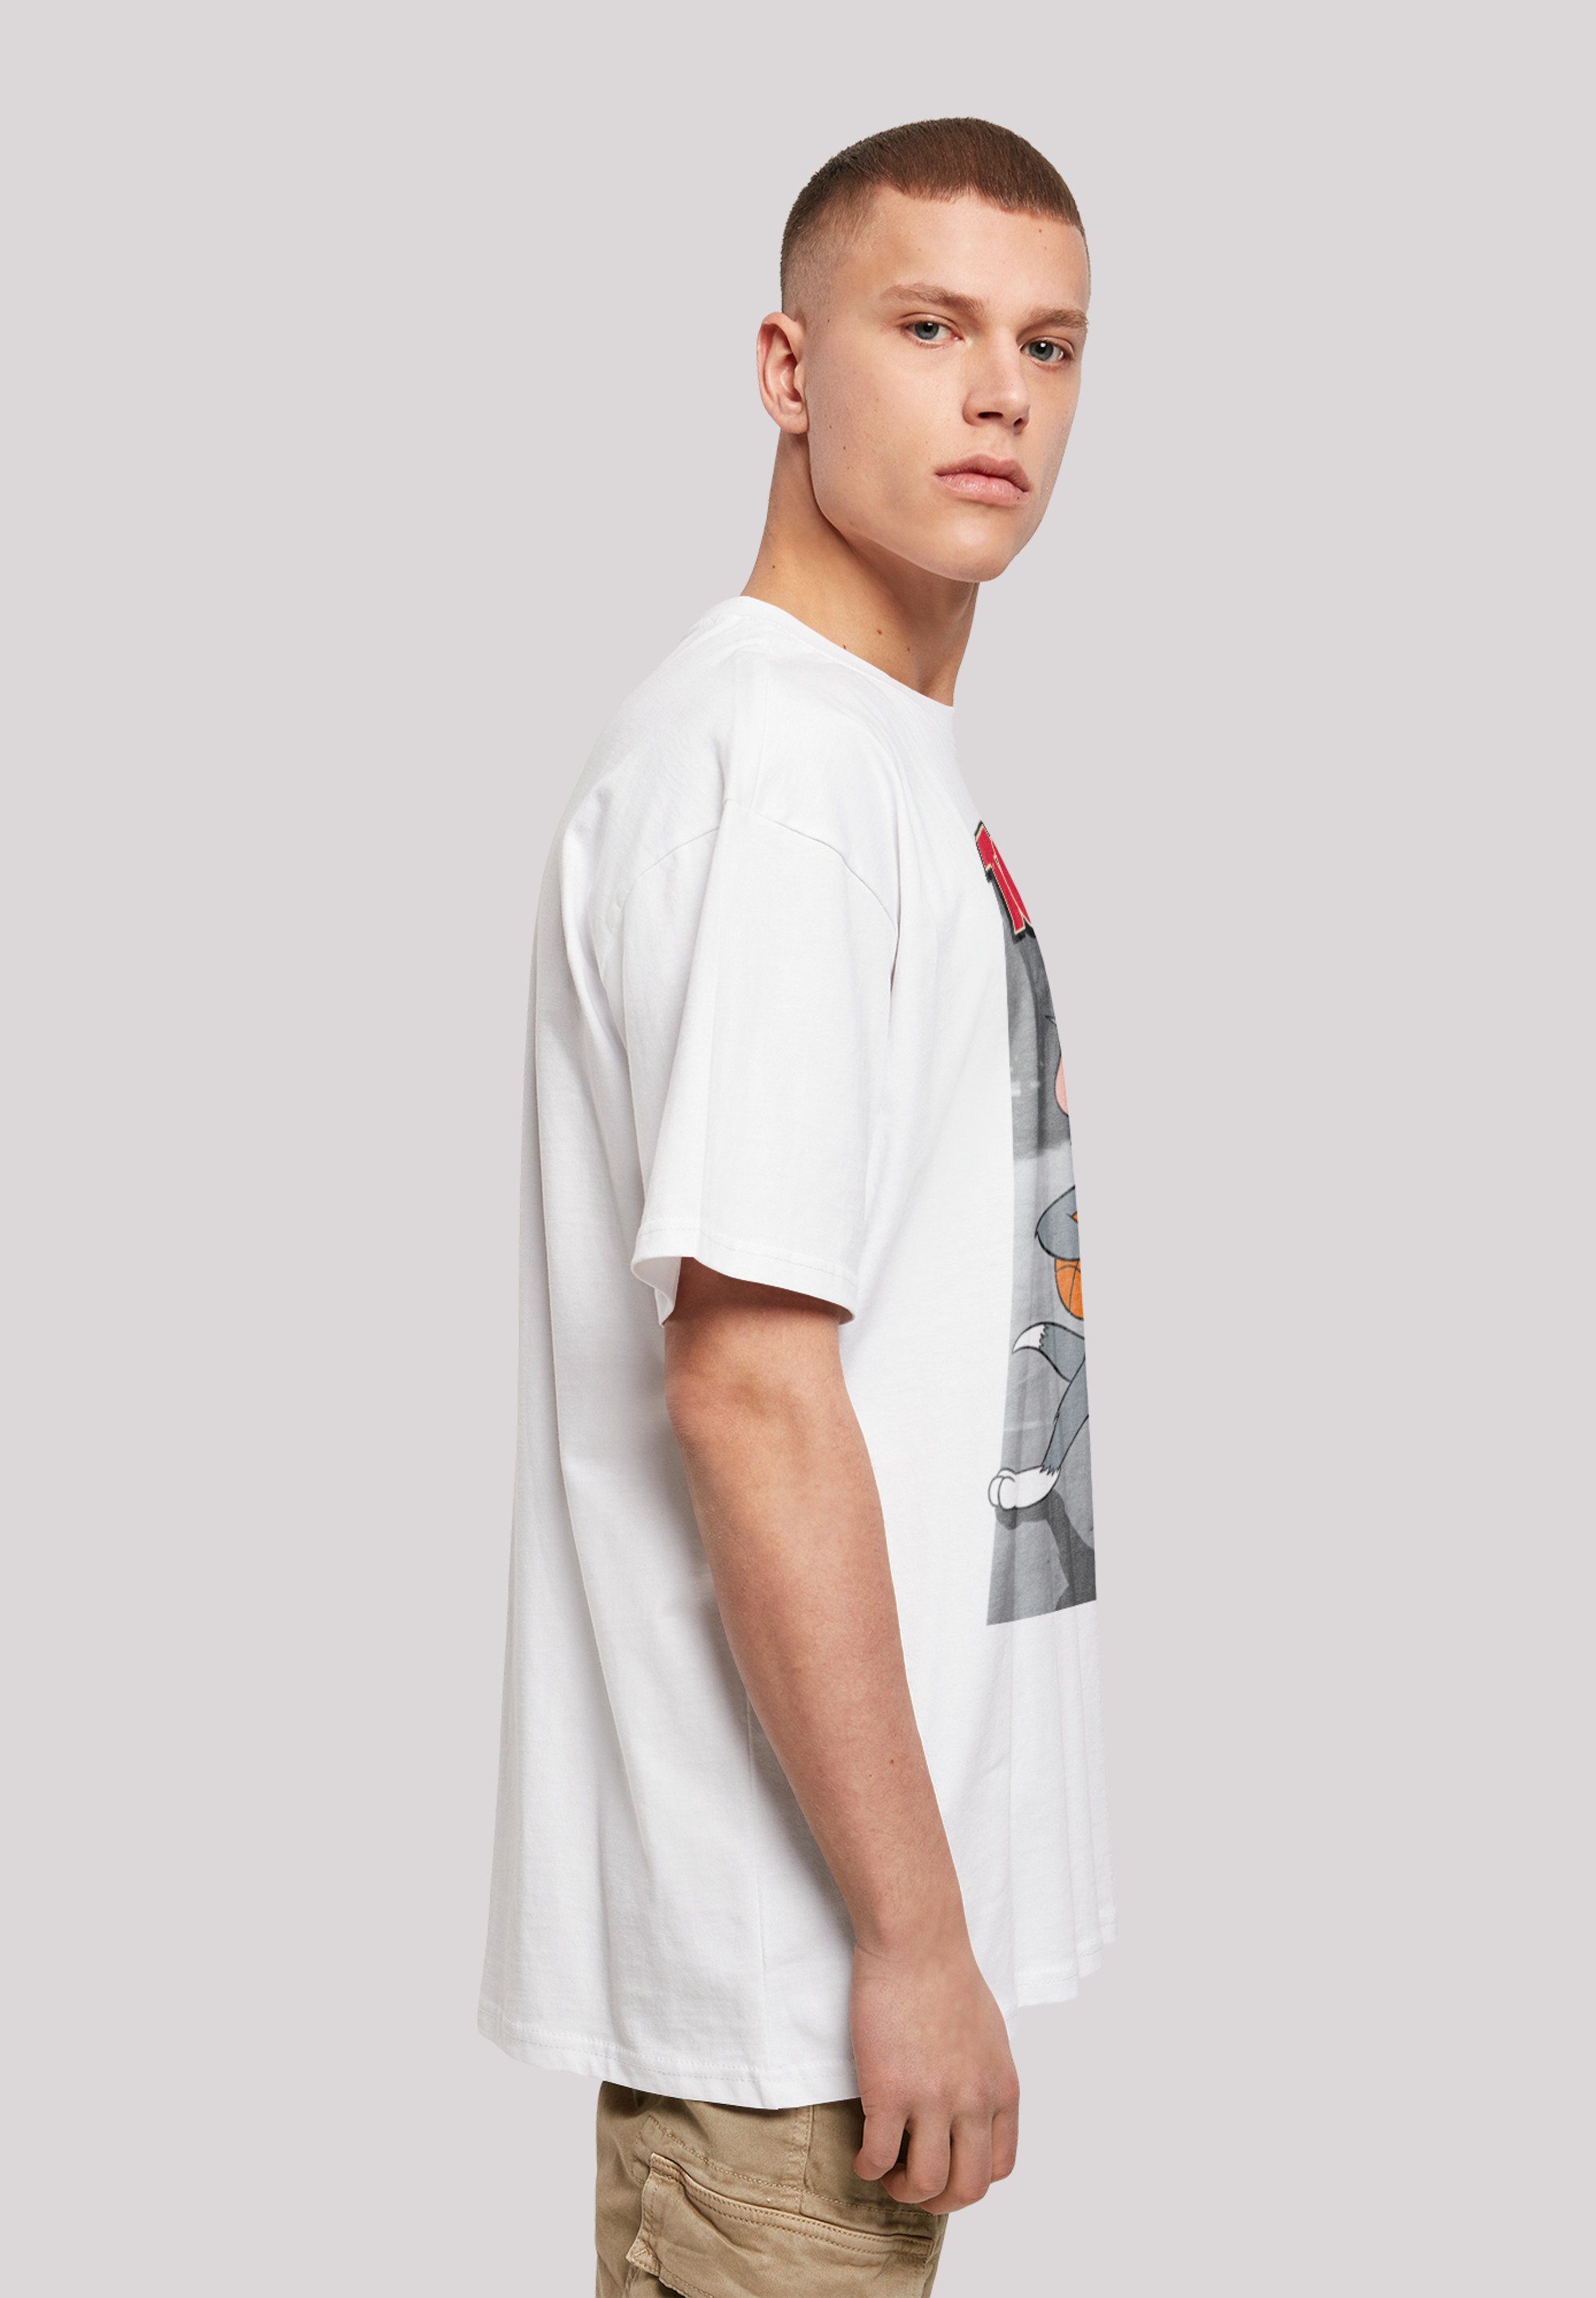 Basketball T-Shirt Buddies Tom Jerry und F4NT4STIC Print